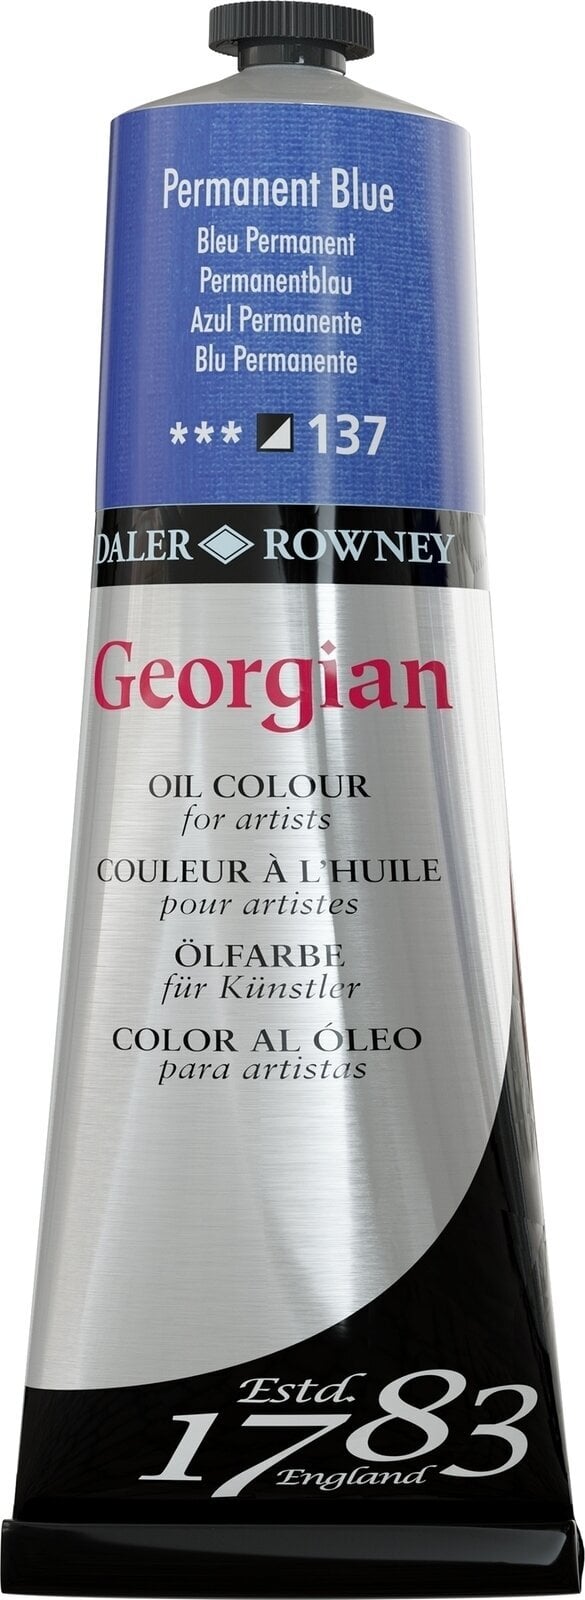 Tempera ad olio Daler Rowney Georgian Pittura a olio Permanent Blue 225 ml 1 pz